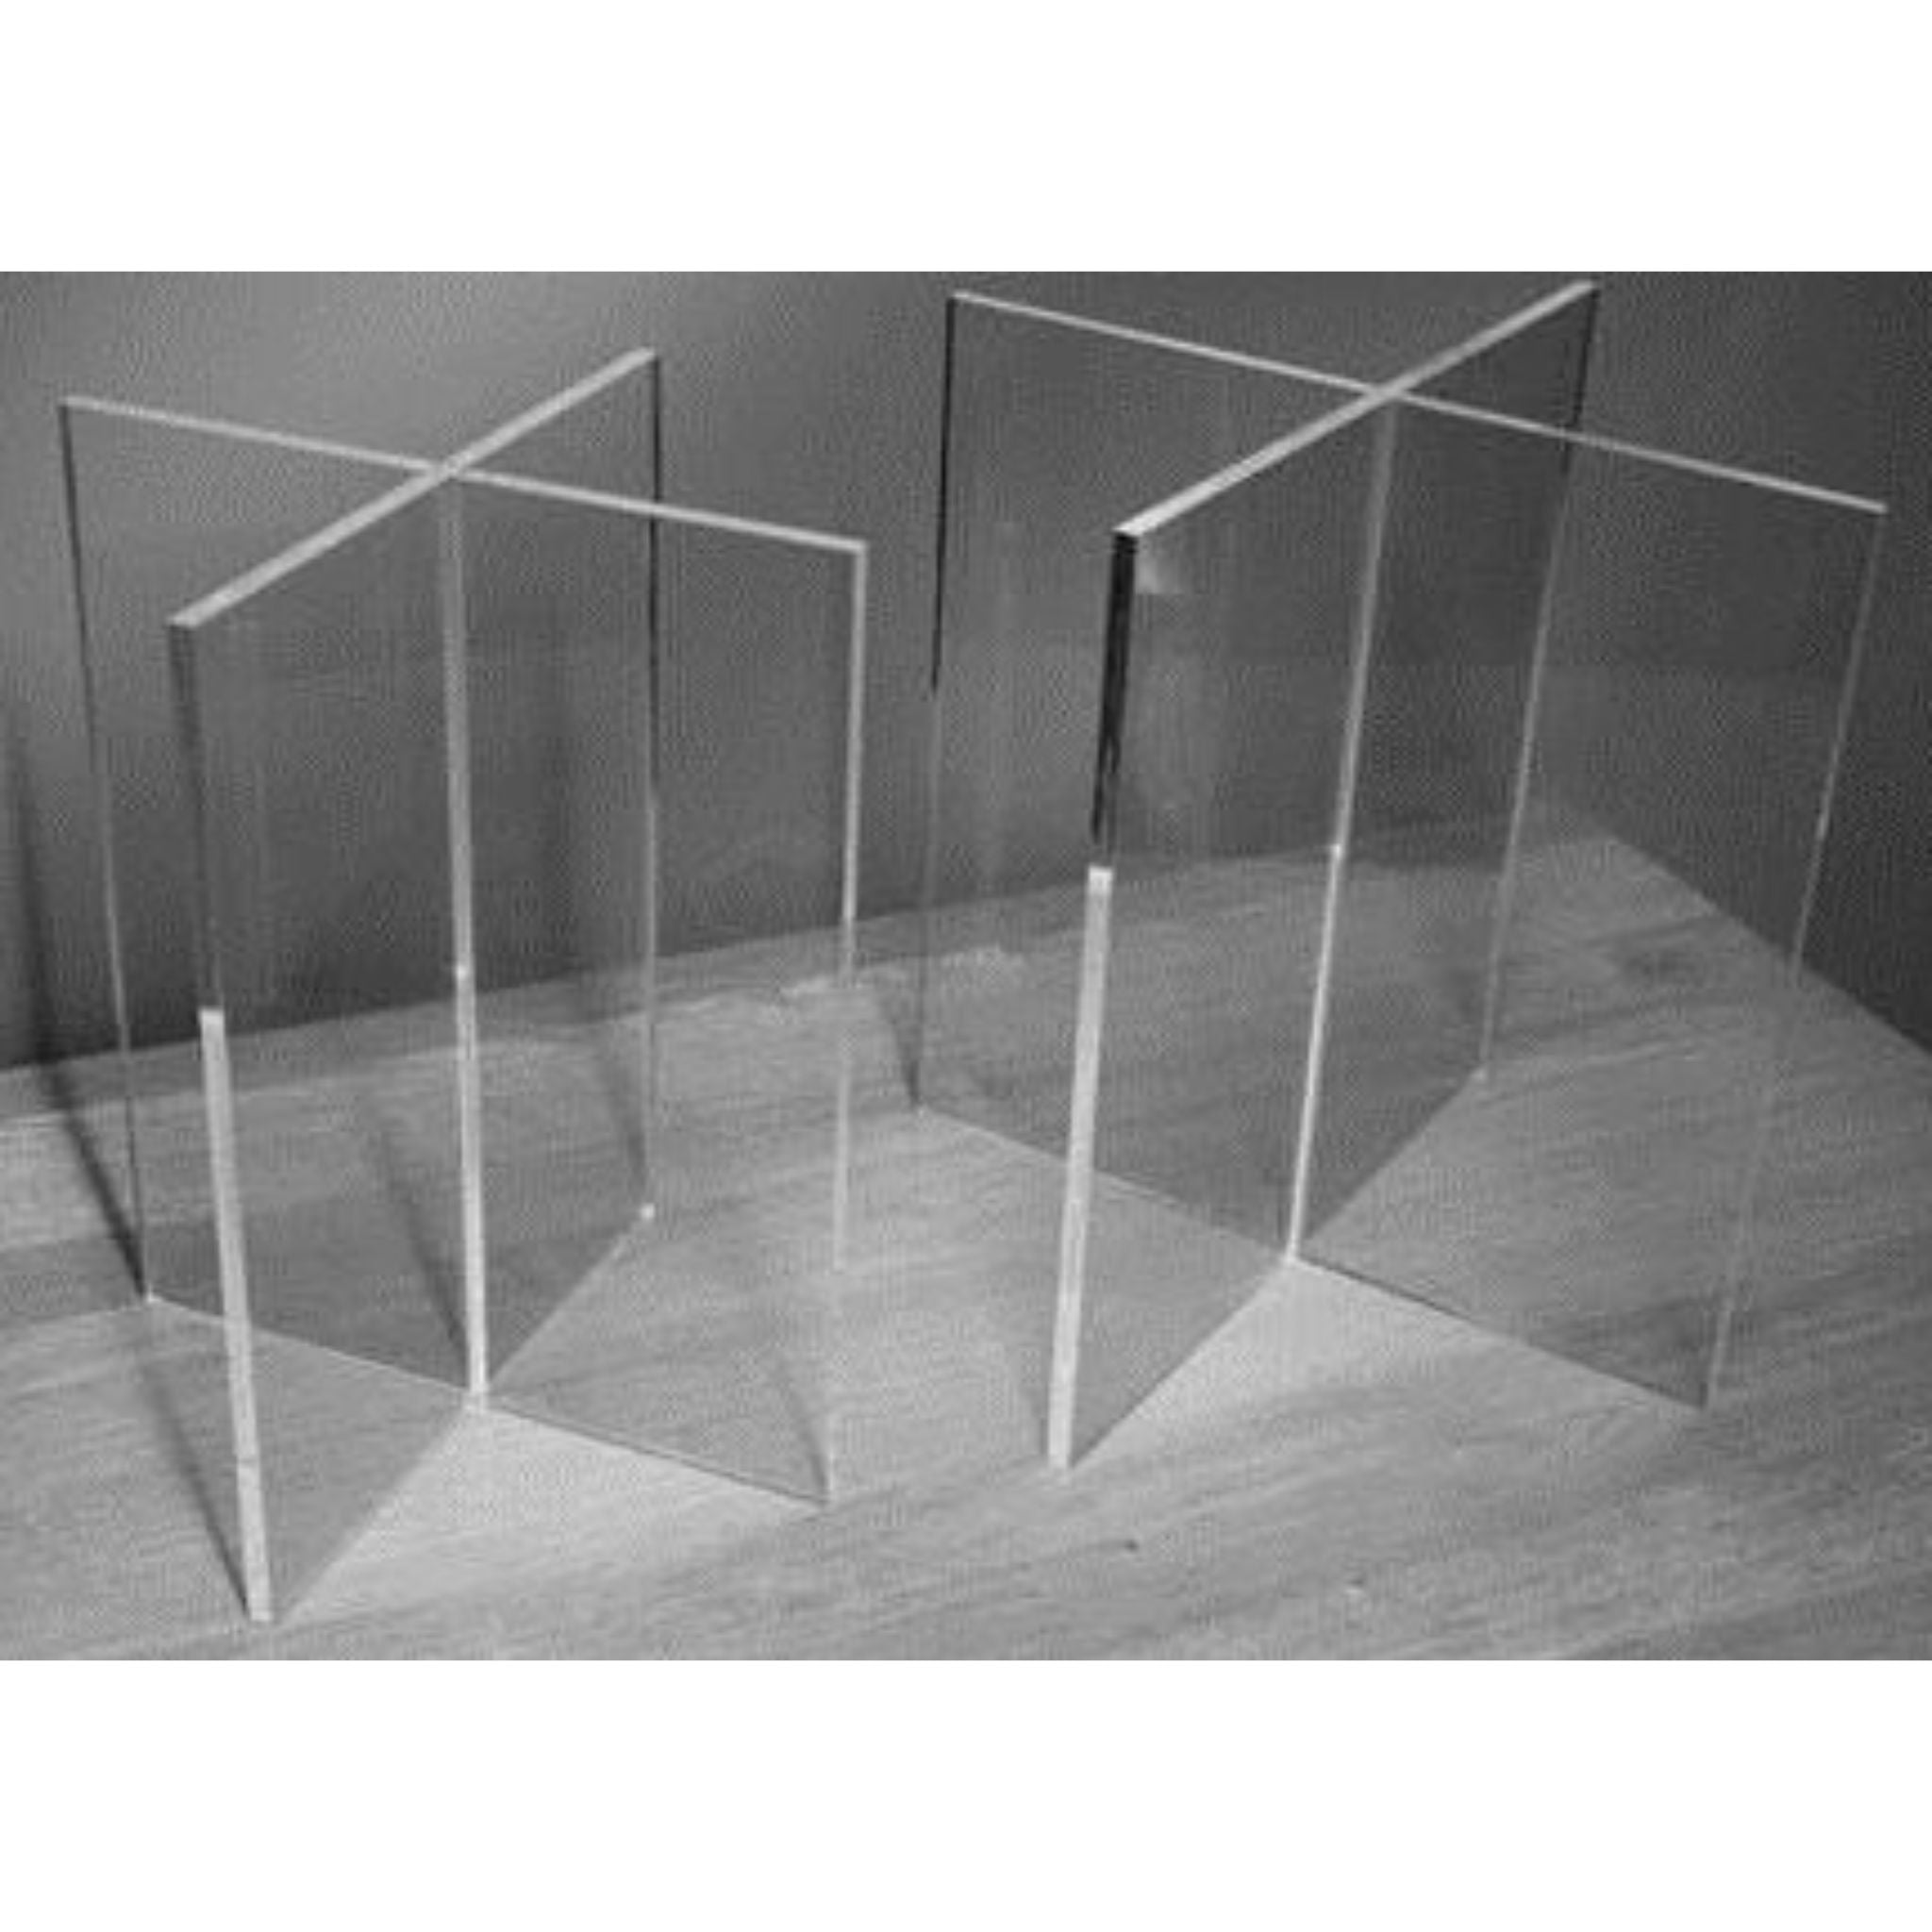 Plexiglass coffin trestles